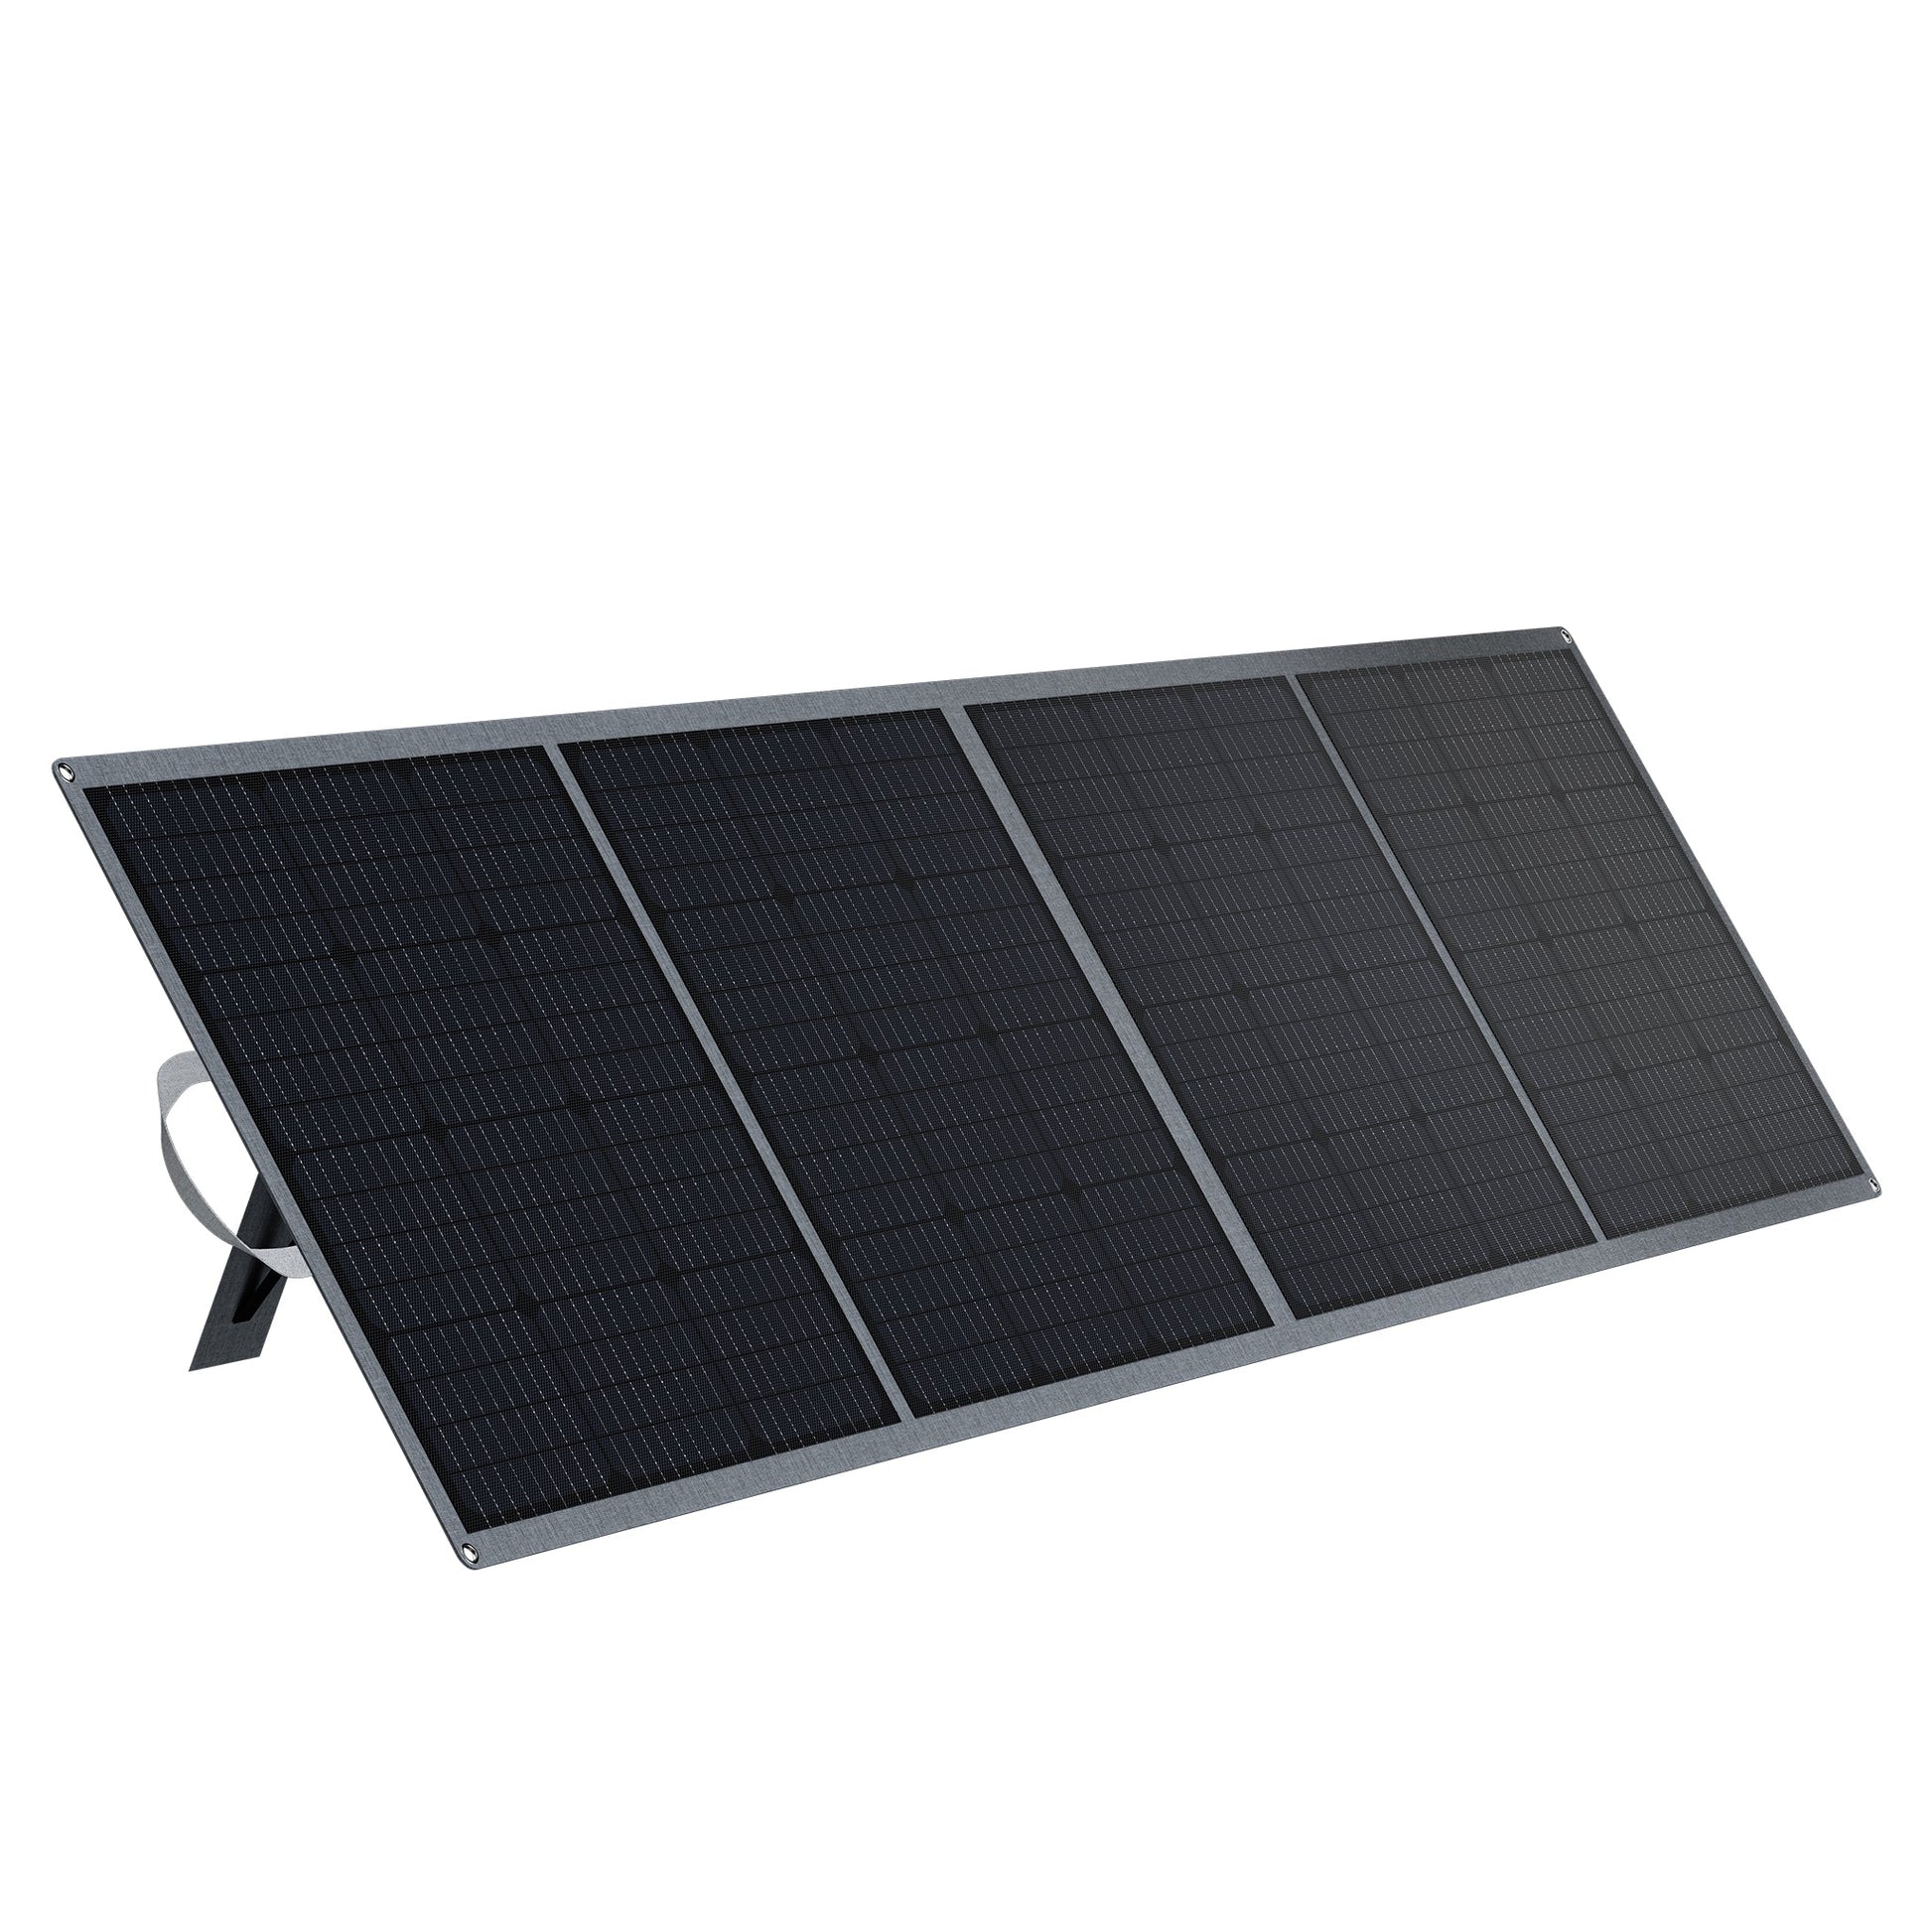 DaranEner SP300 Solar Panel | 300W - DaranEner Portable Power Station